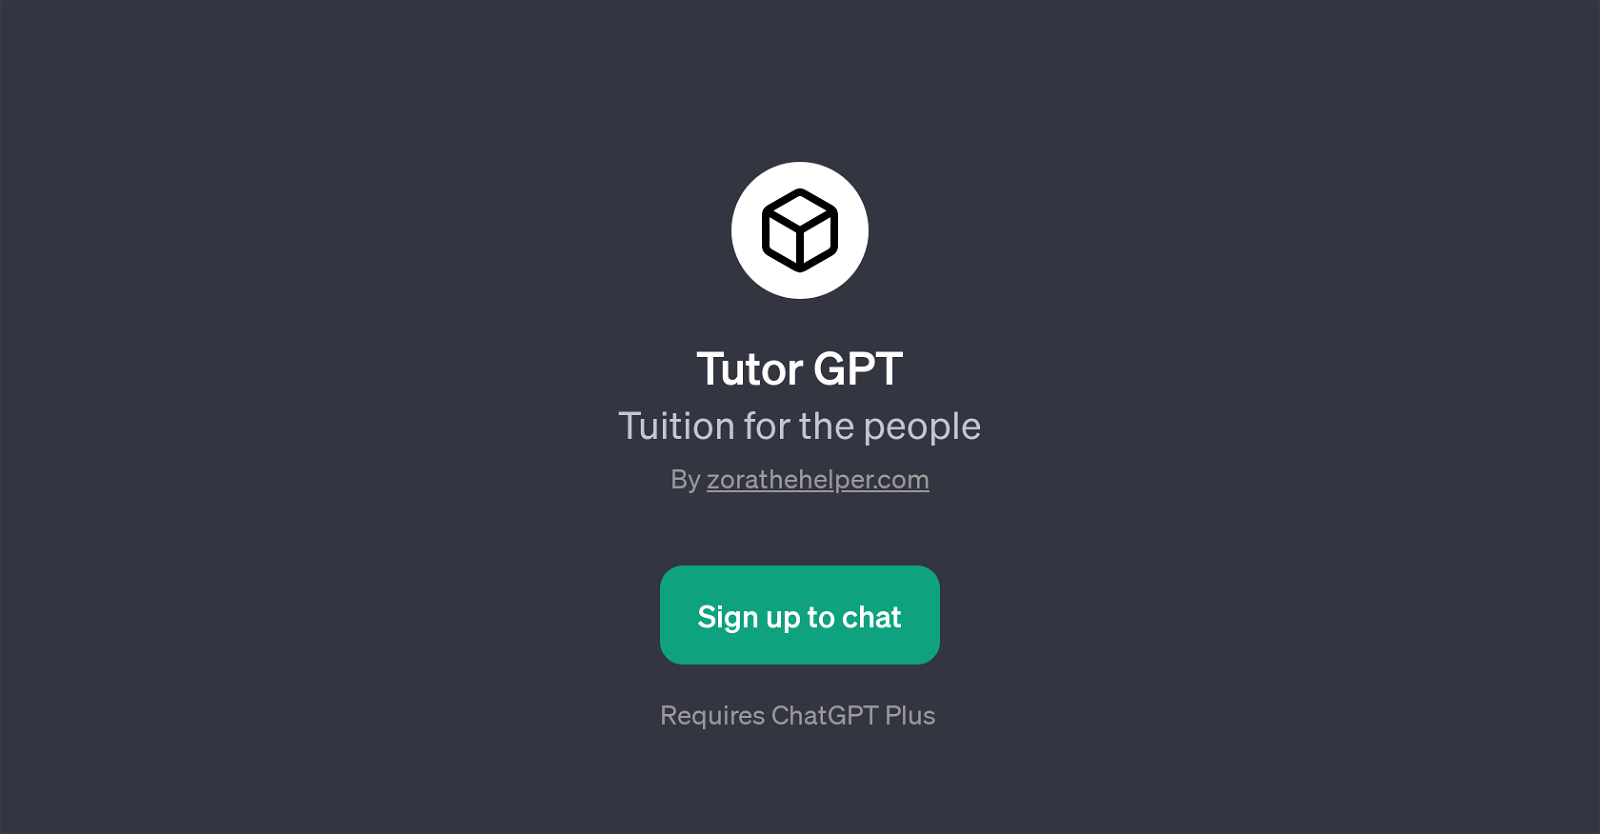 Tutor GPT website